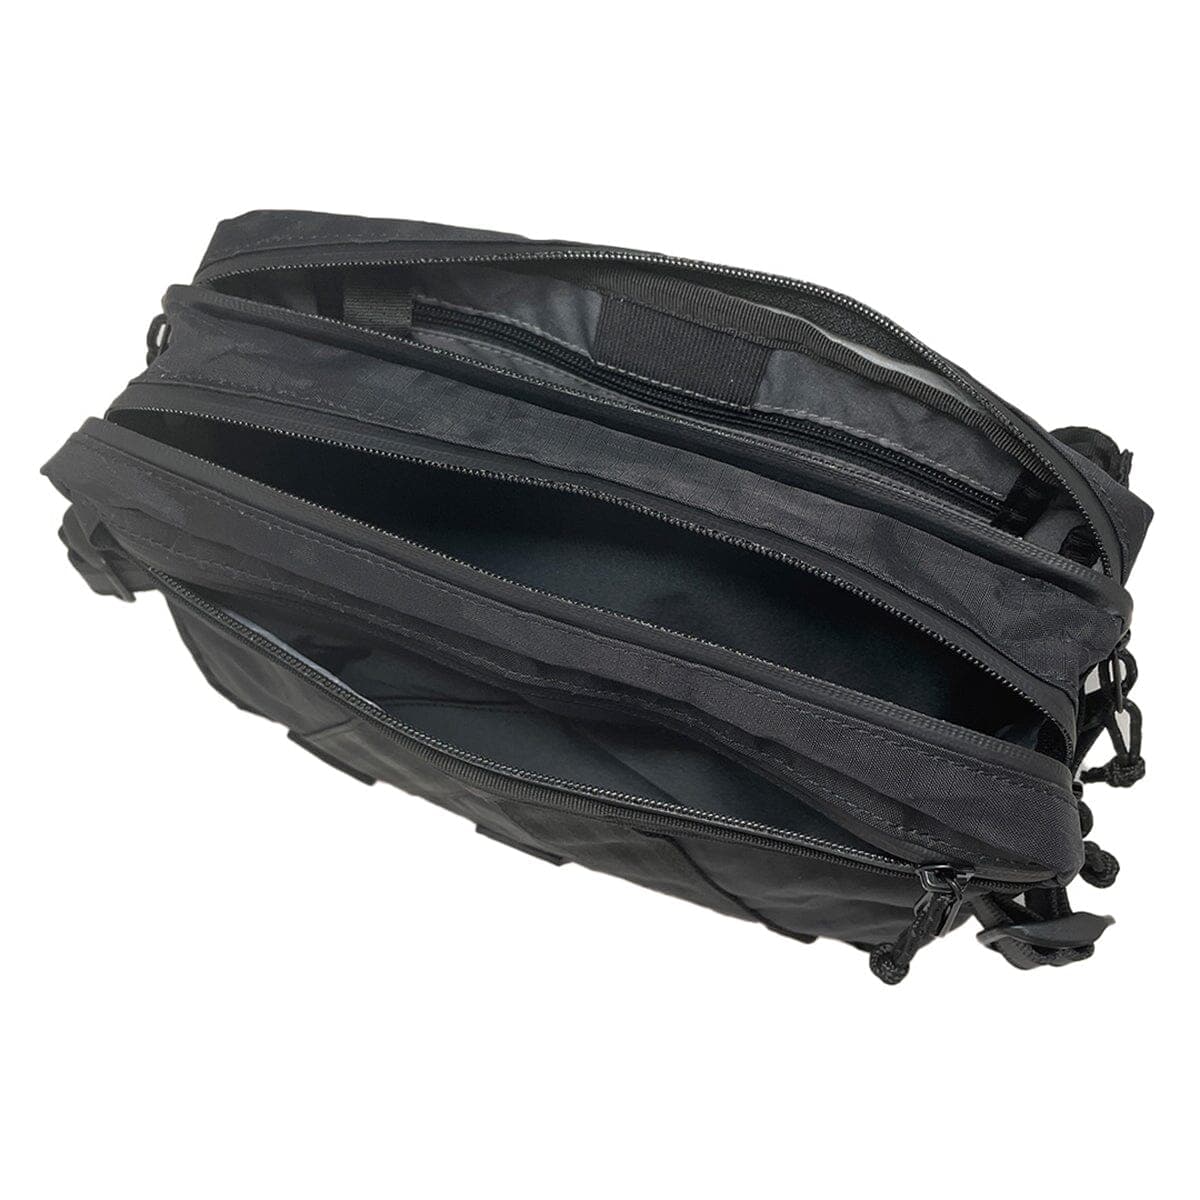 Inside of the Tensile bag, pockets open #color_black x